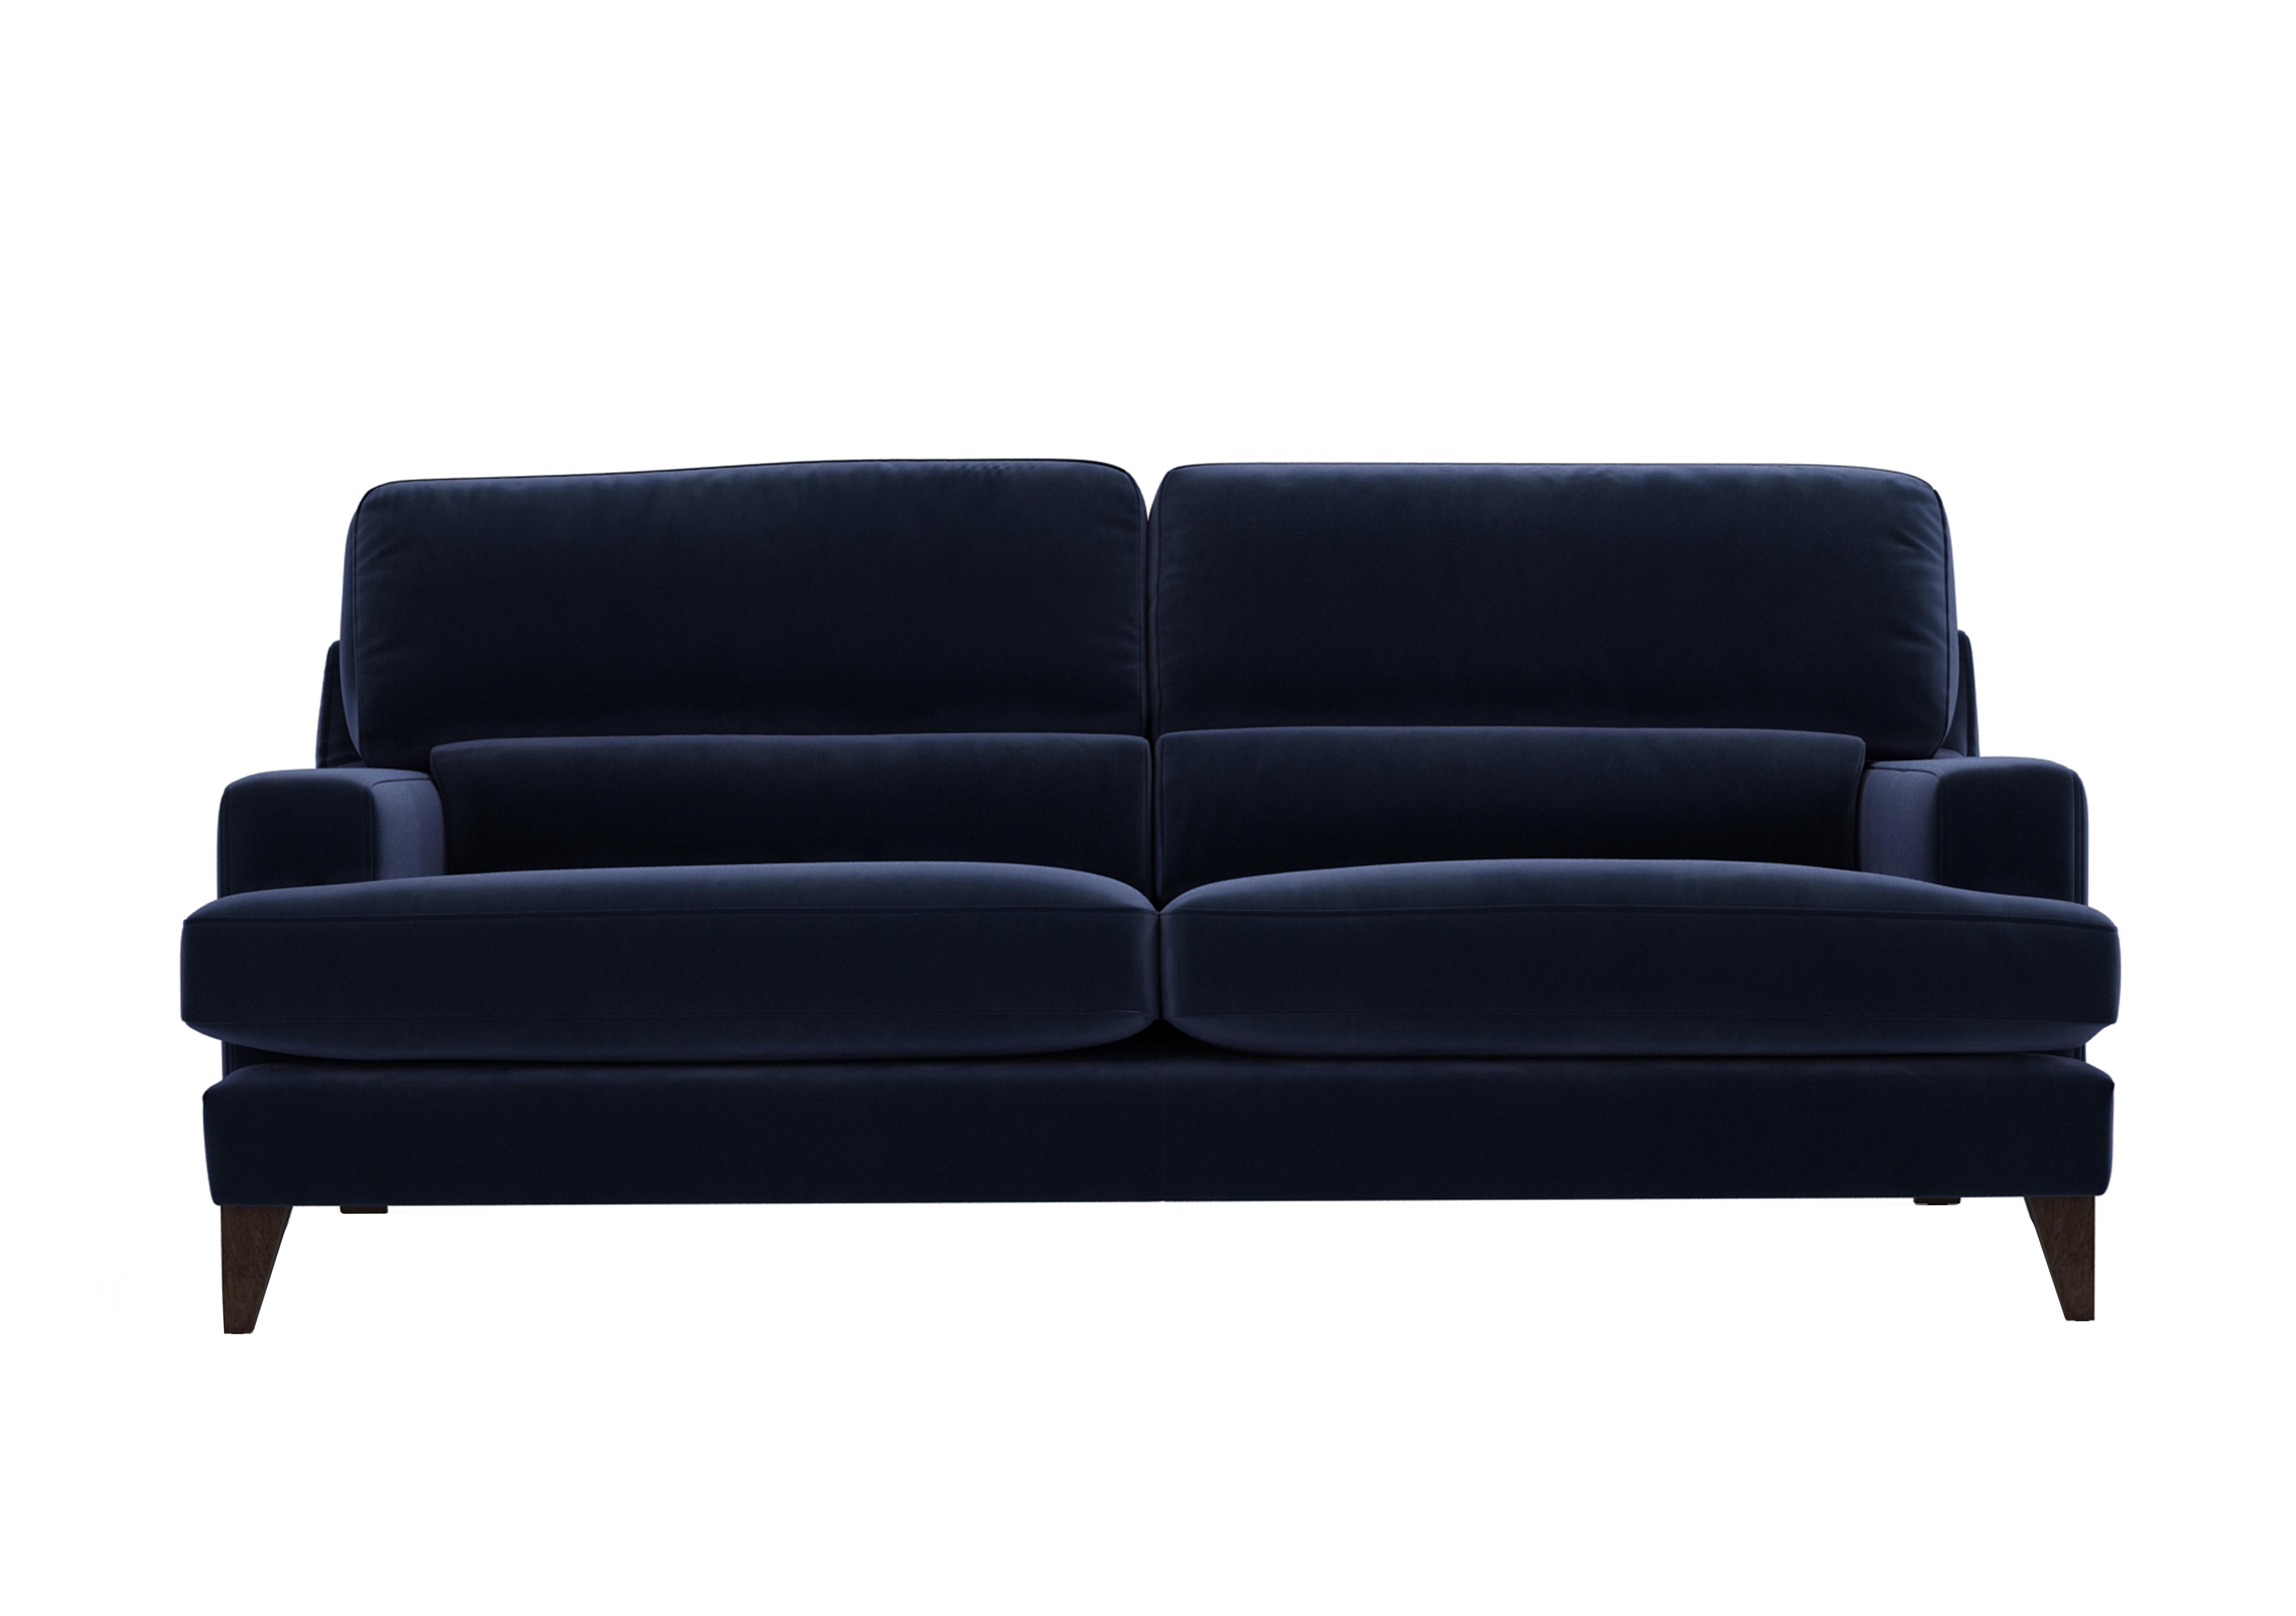 Romilly 4 Seater Fabric Sofa in Mid009 Midnight Indigo Wa Ft on Furniture Village